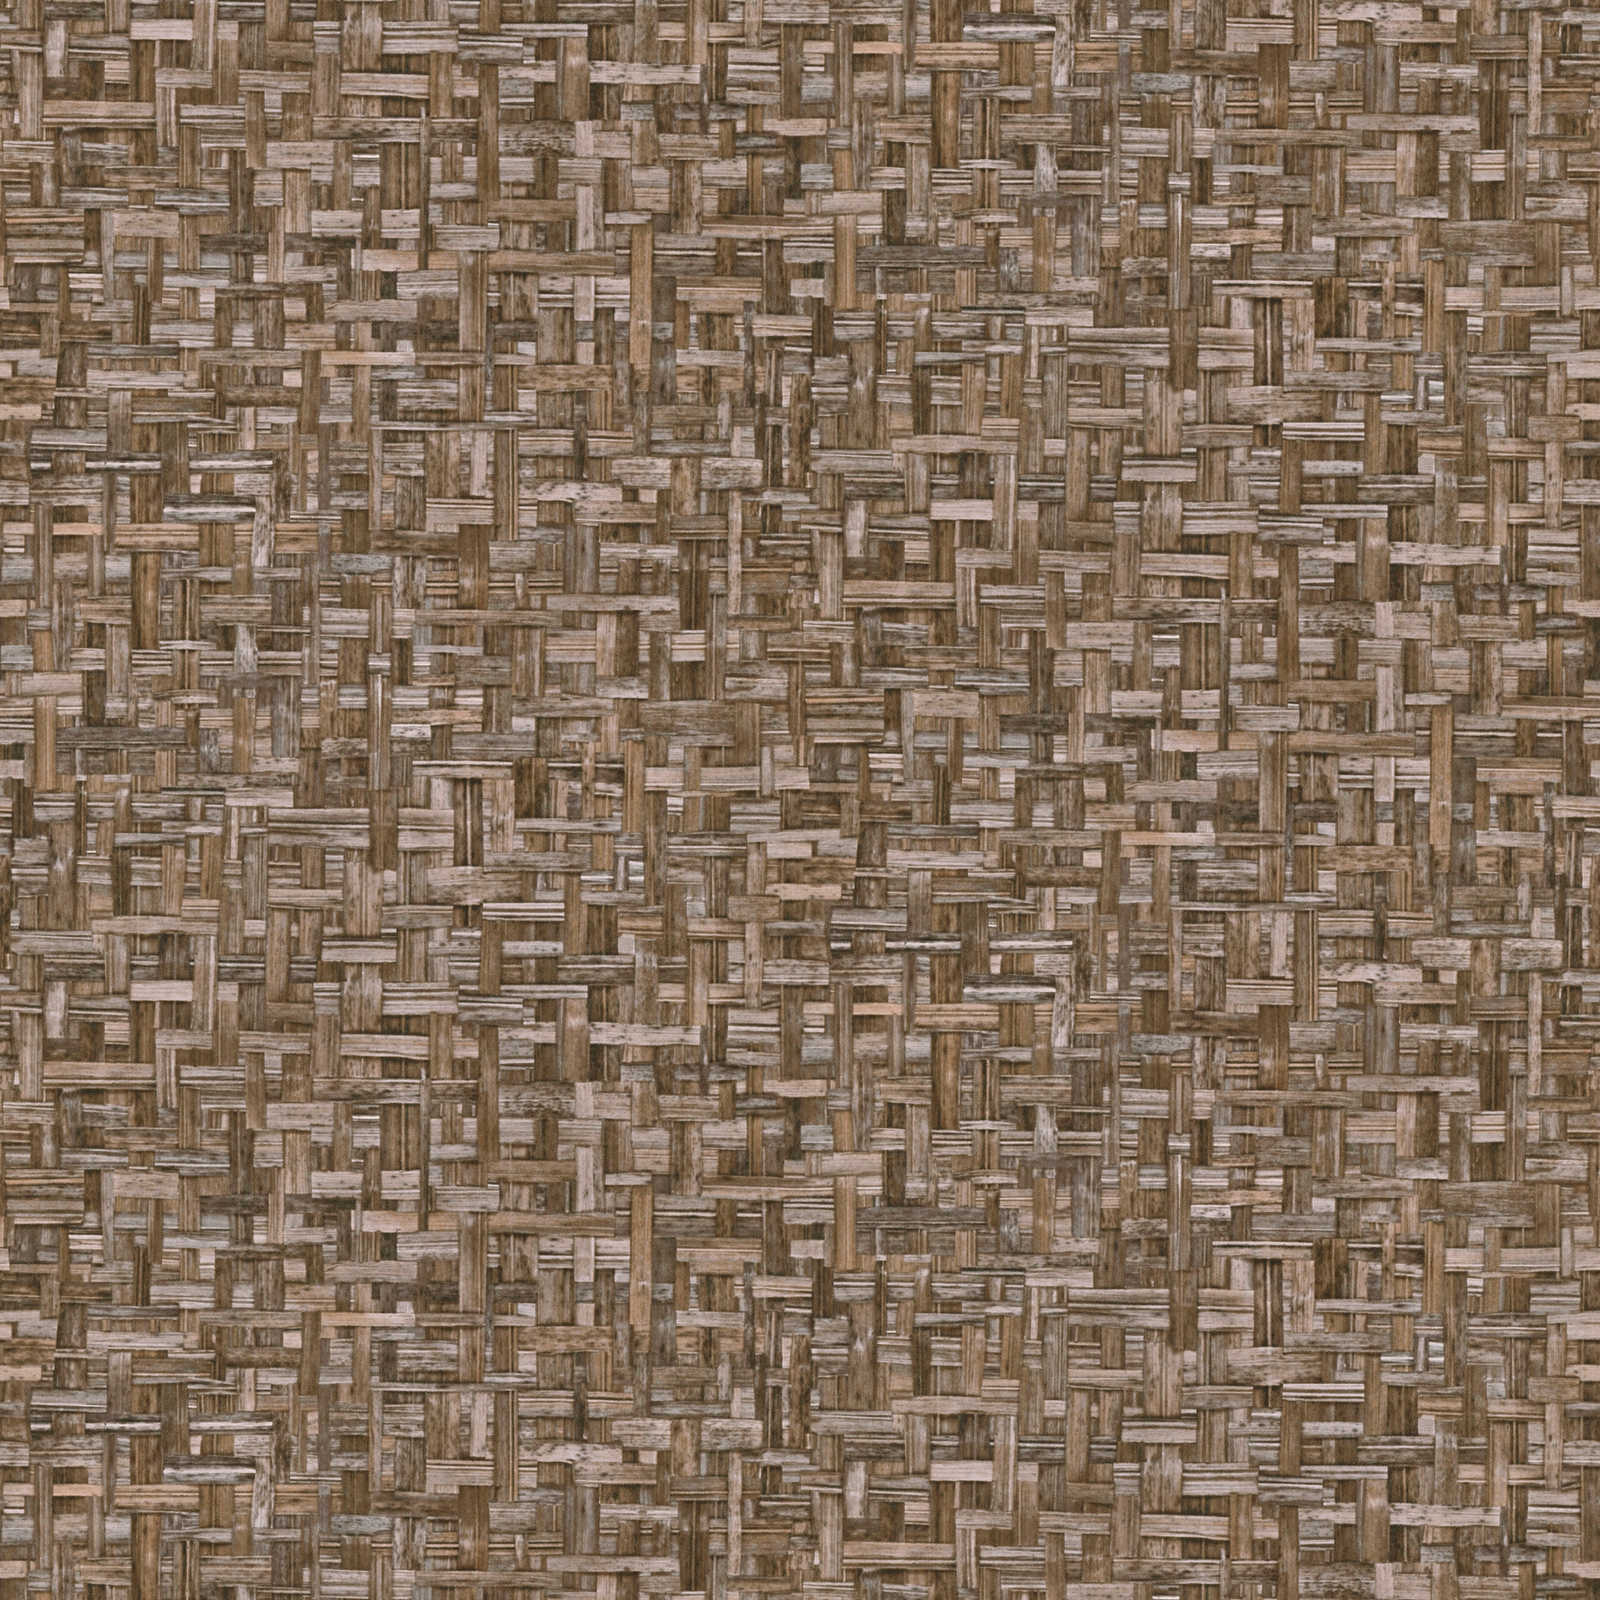 Wood look wallpaper brown with miro mosaic pattern - brown
